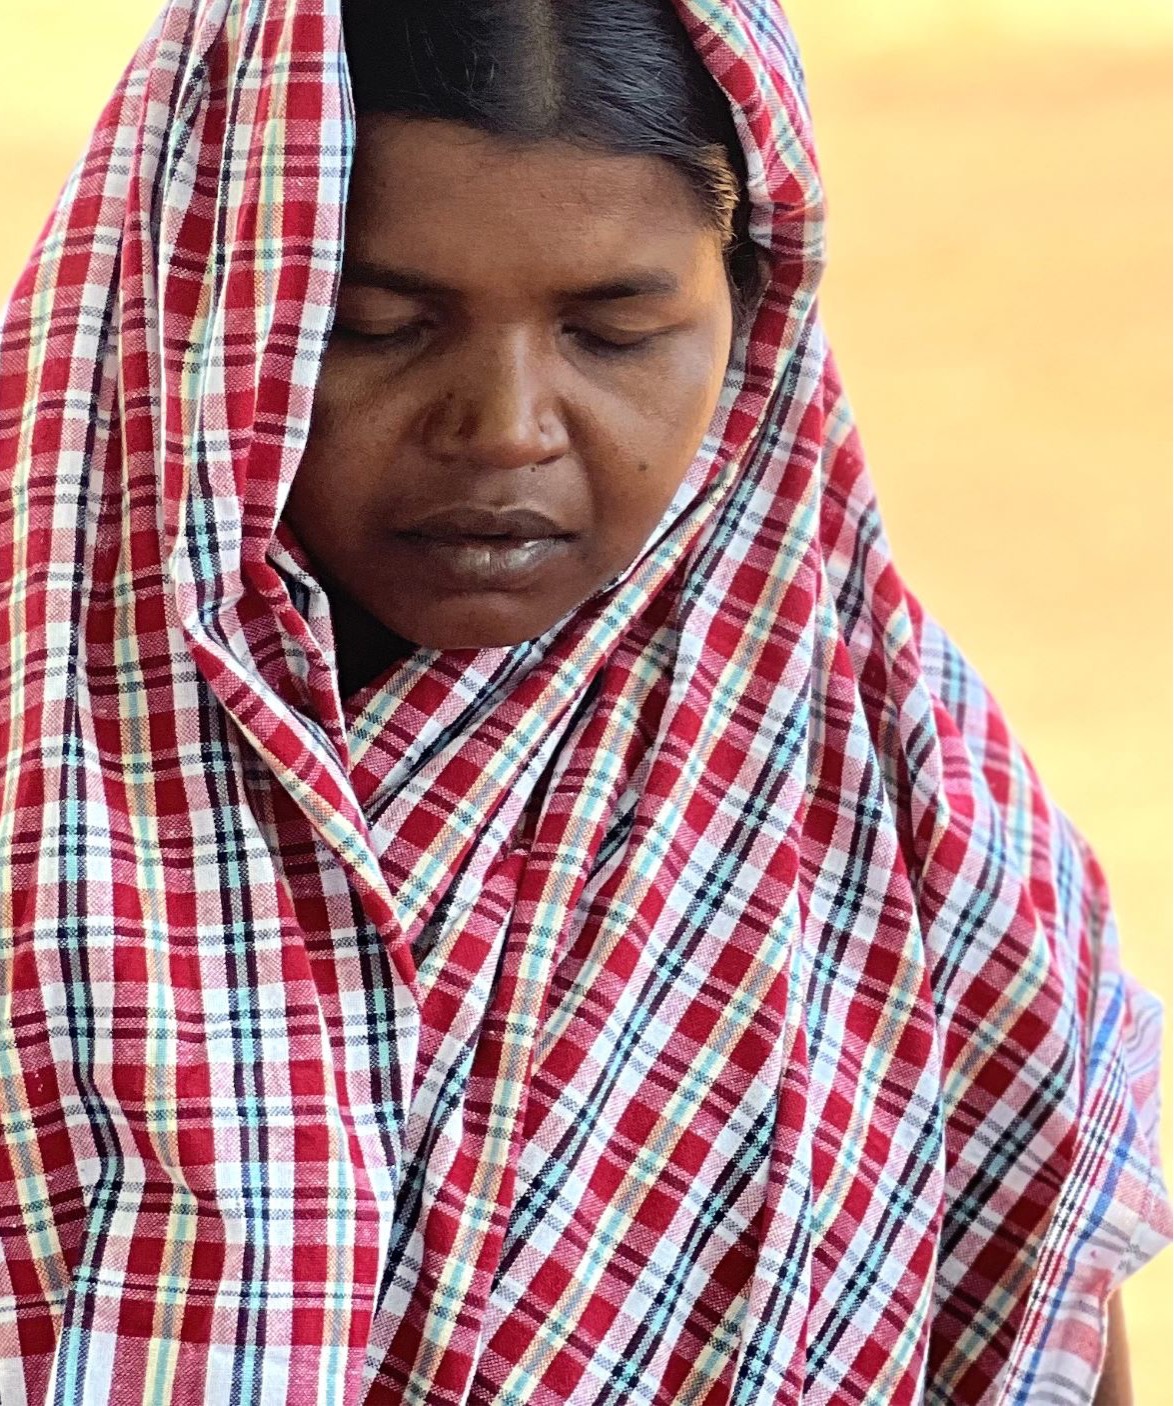 INDIA: Murdered convert’s widow still unable to return home